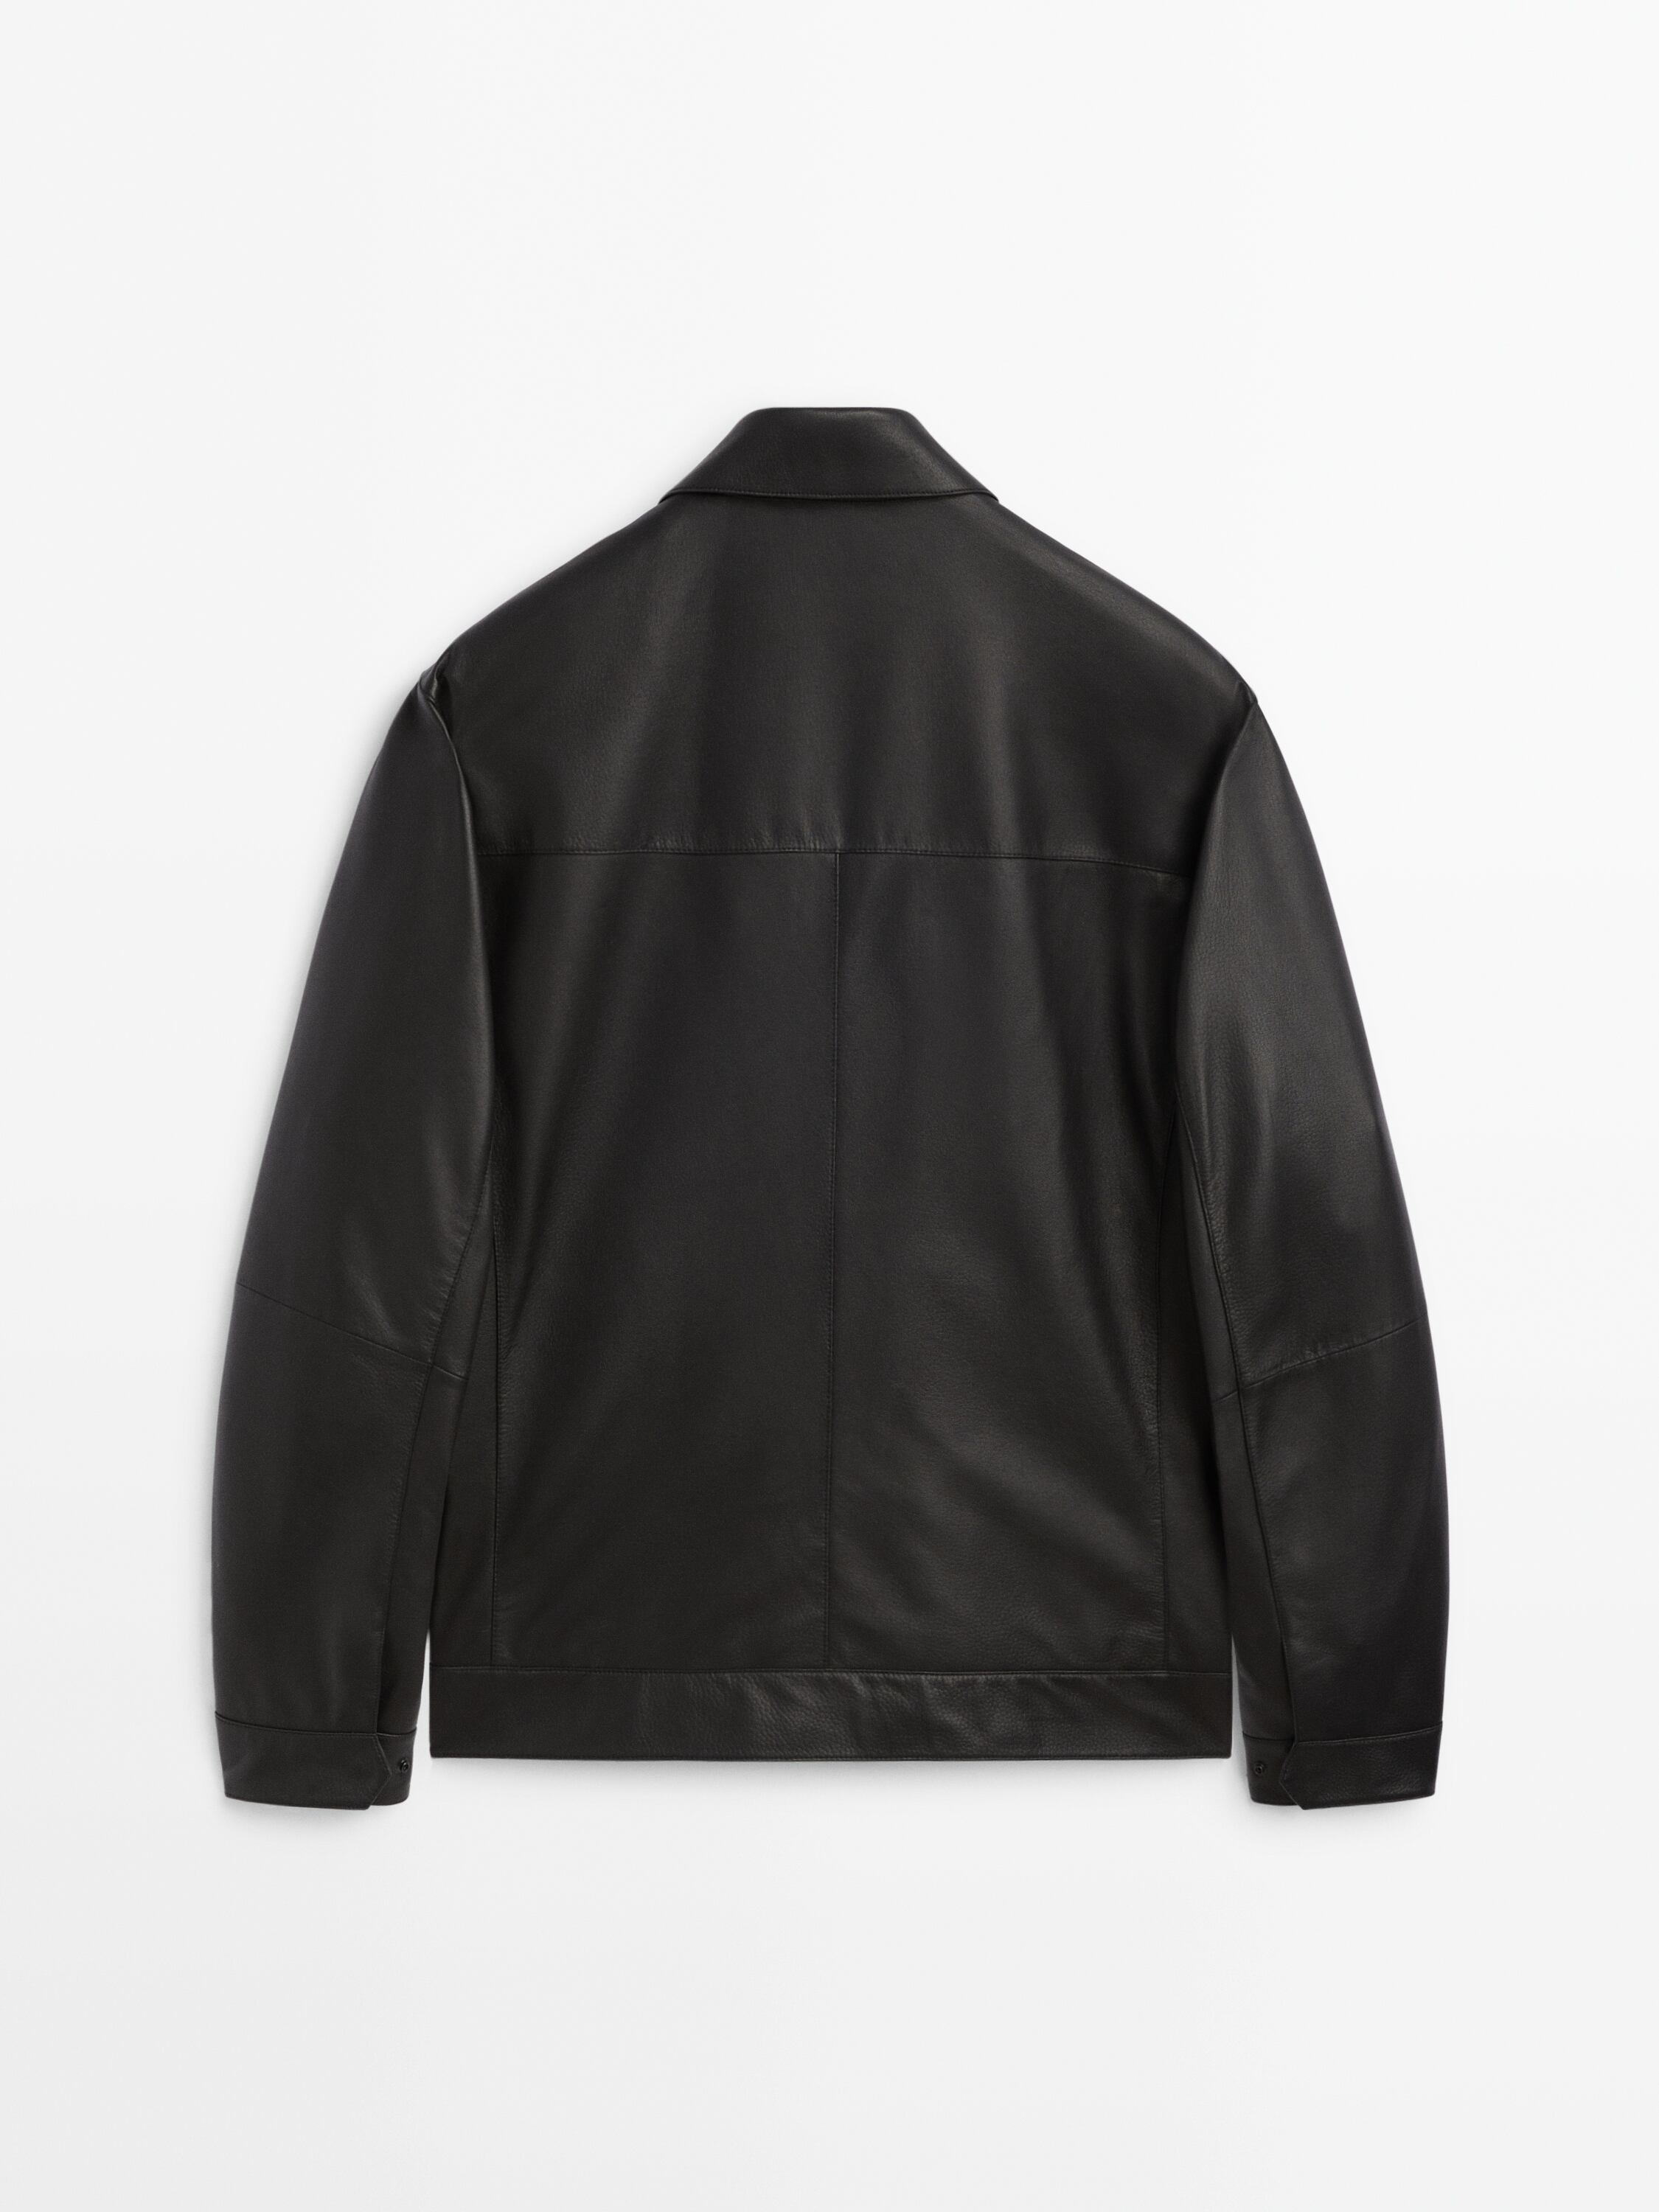 Nappa leather trucker jacket